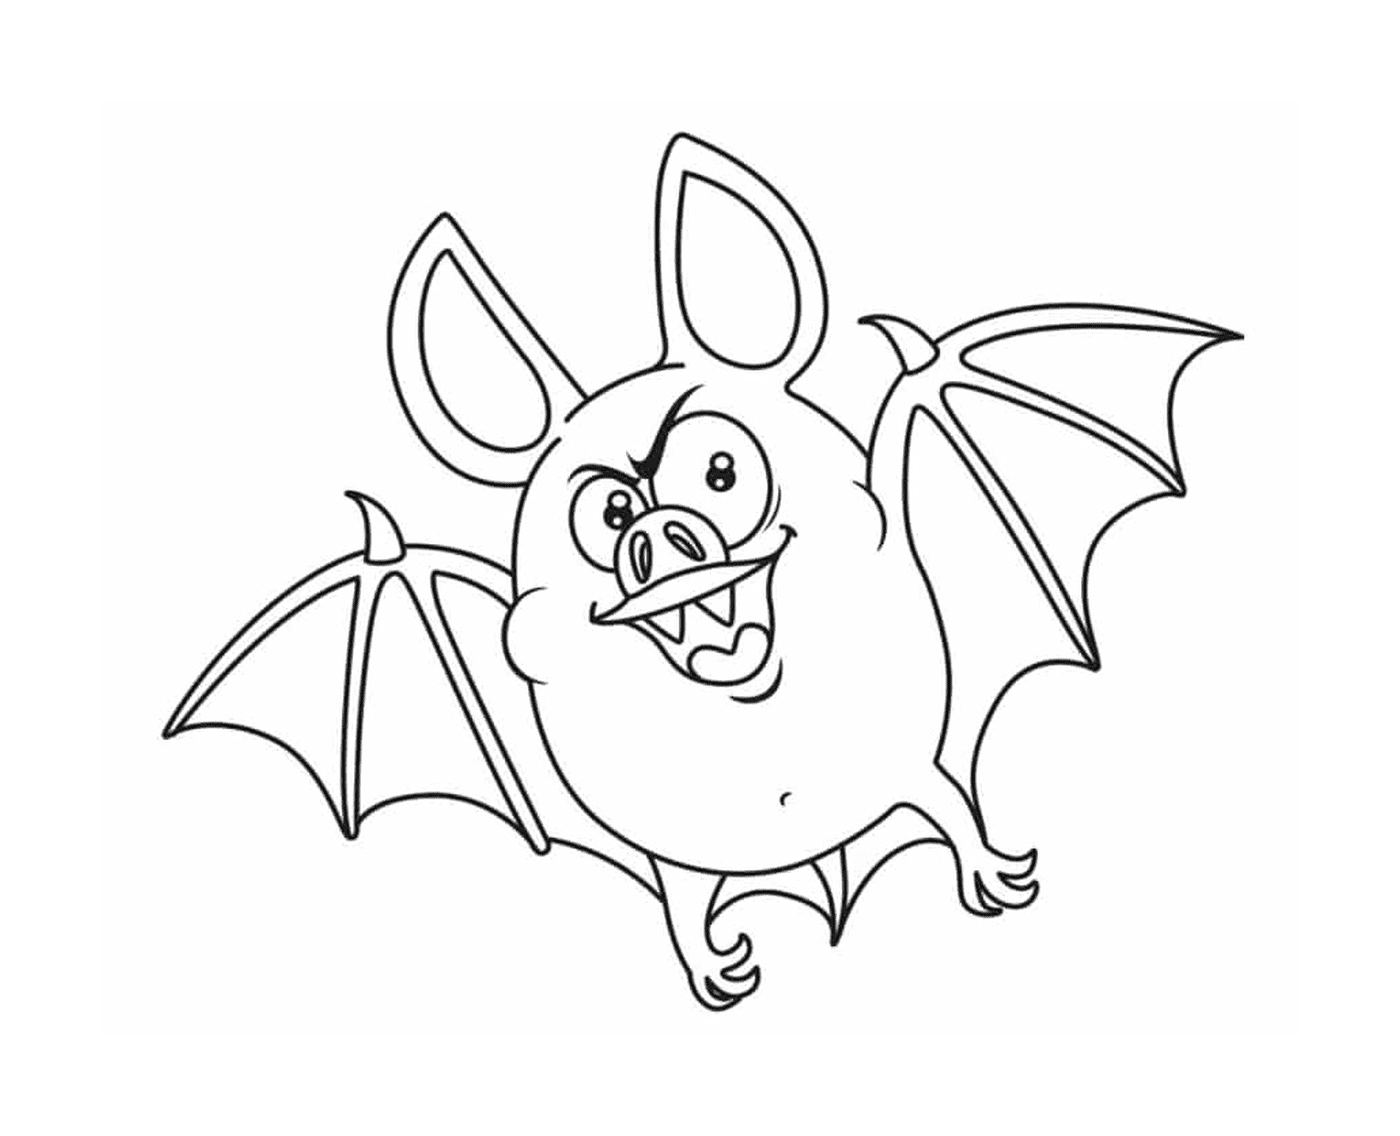  Vampire bat, creature of the night 